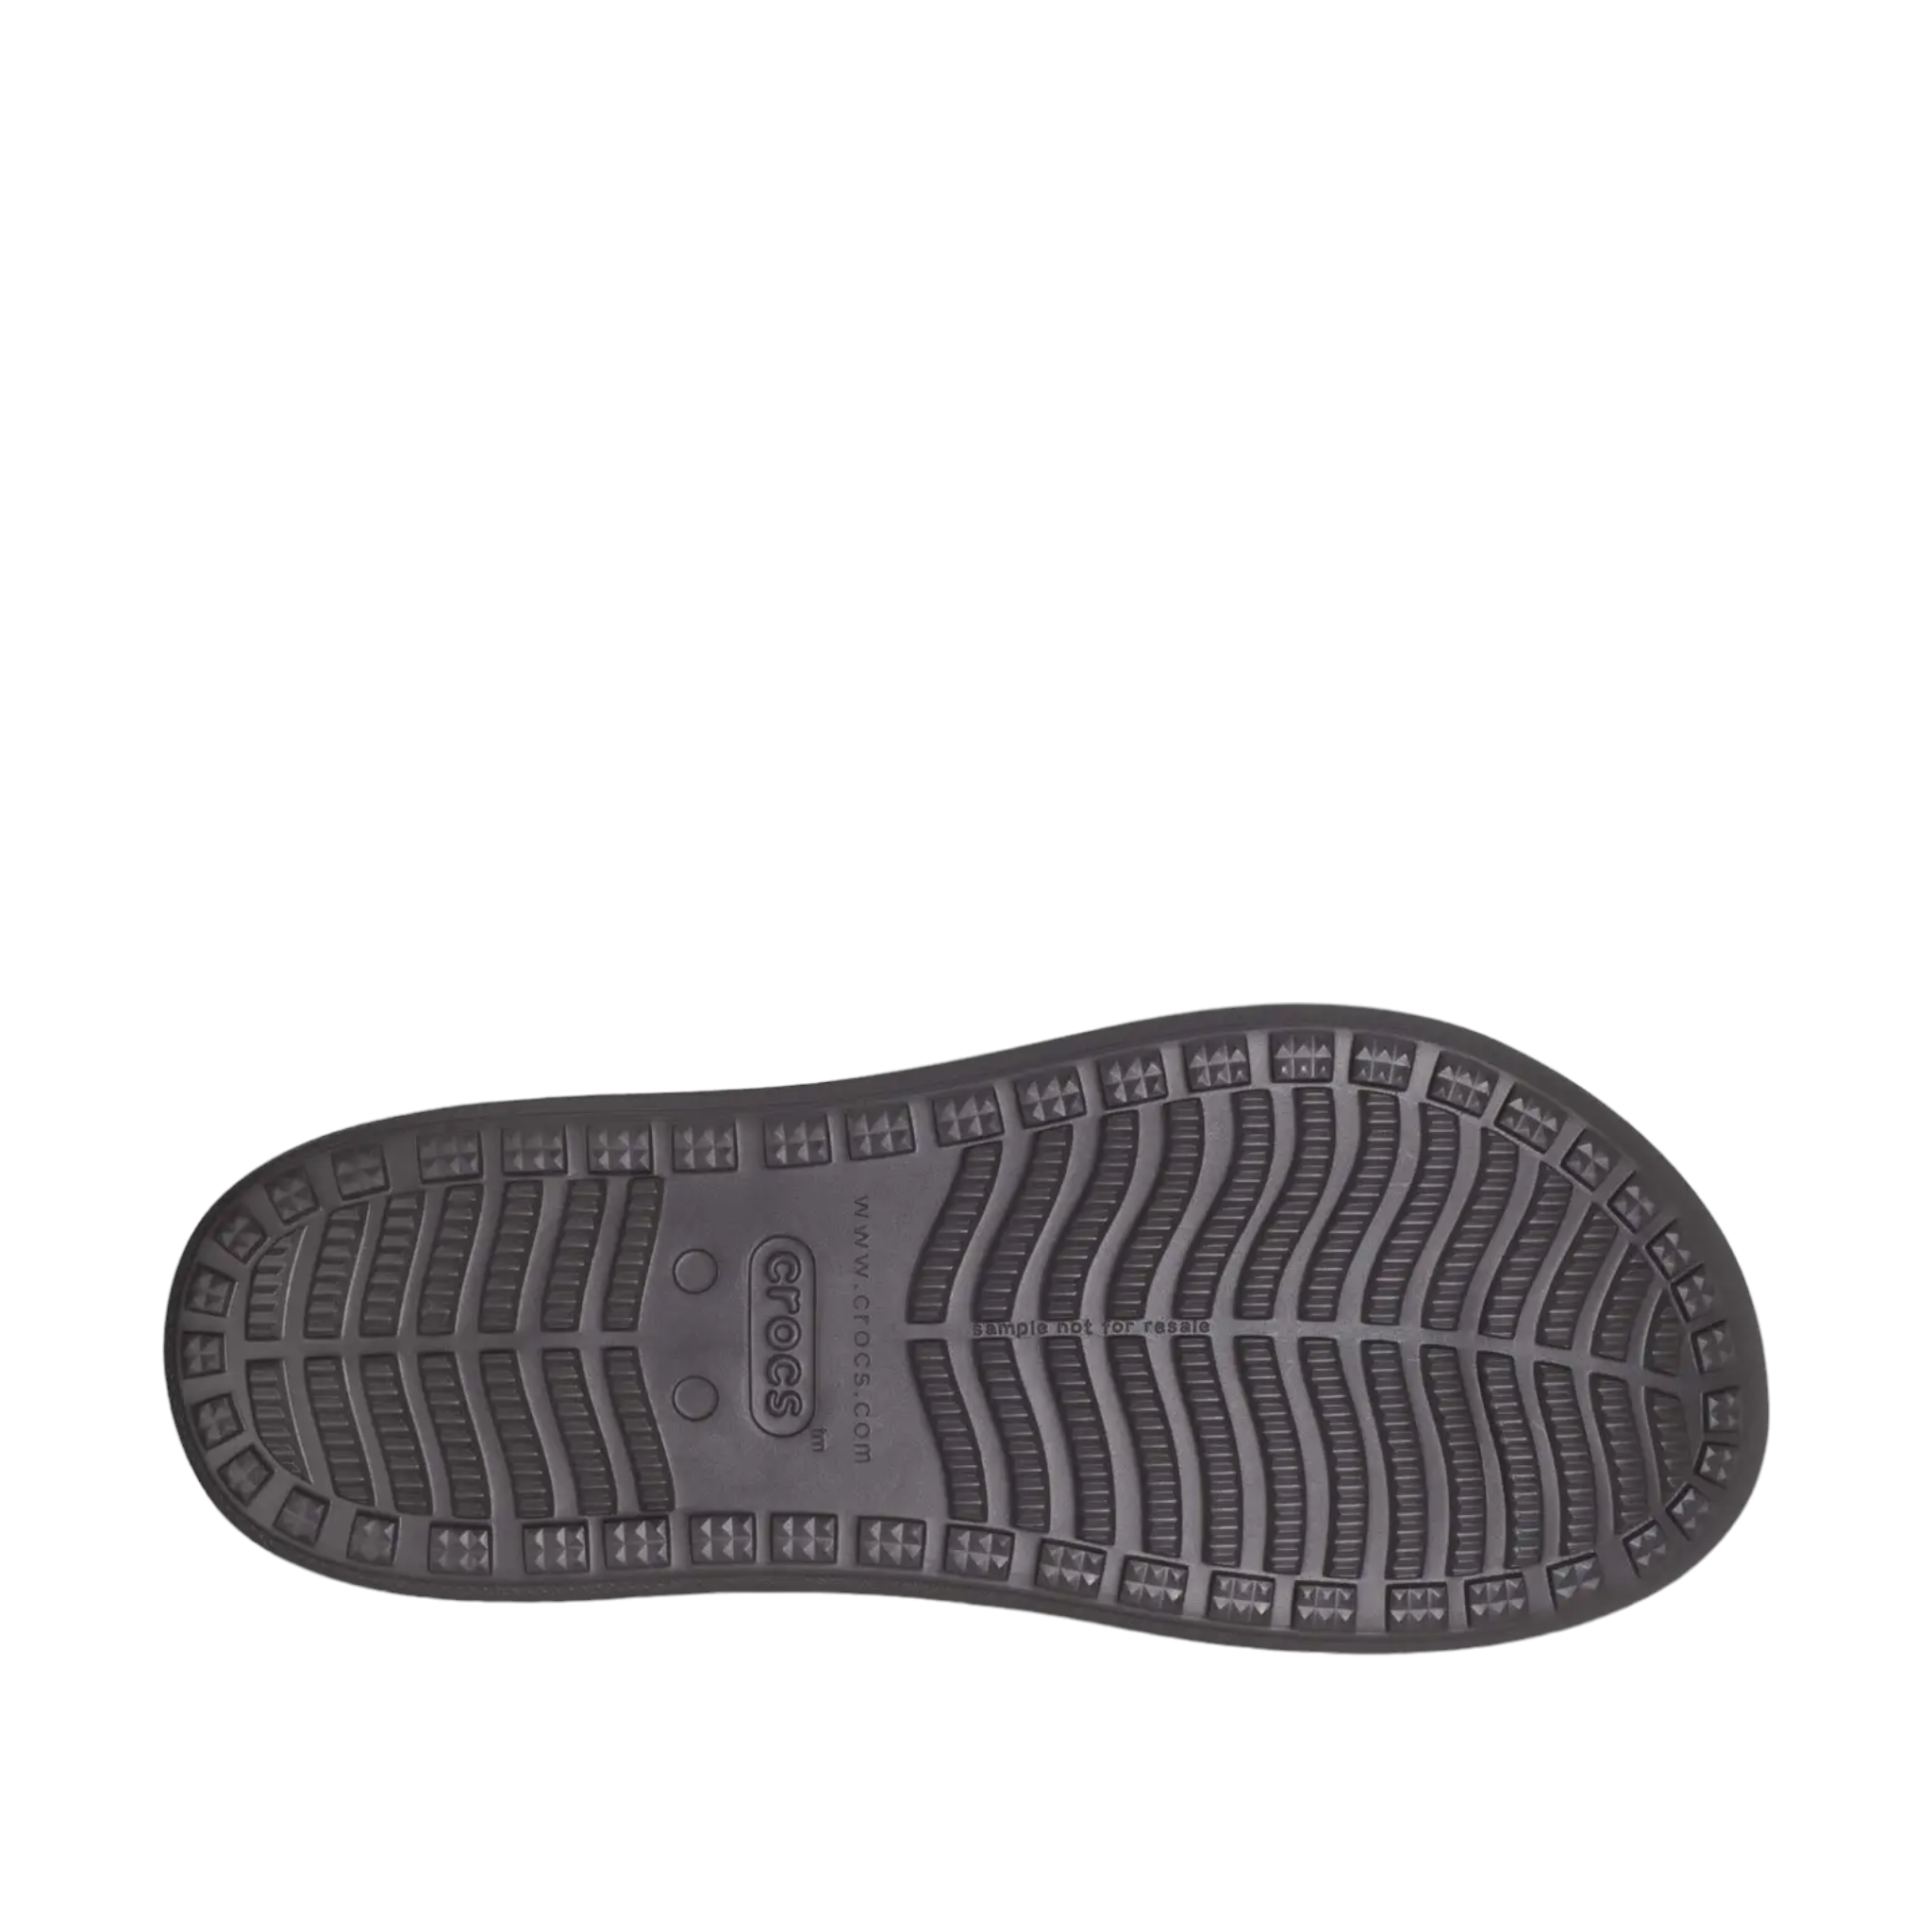 Yukon Vista II Literide Flip - shoe&amp;me - Crocs - Jandals - Jandal, Mens, Summer